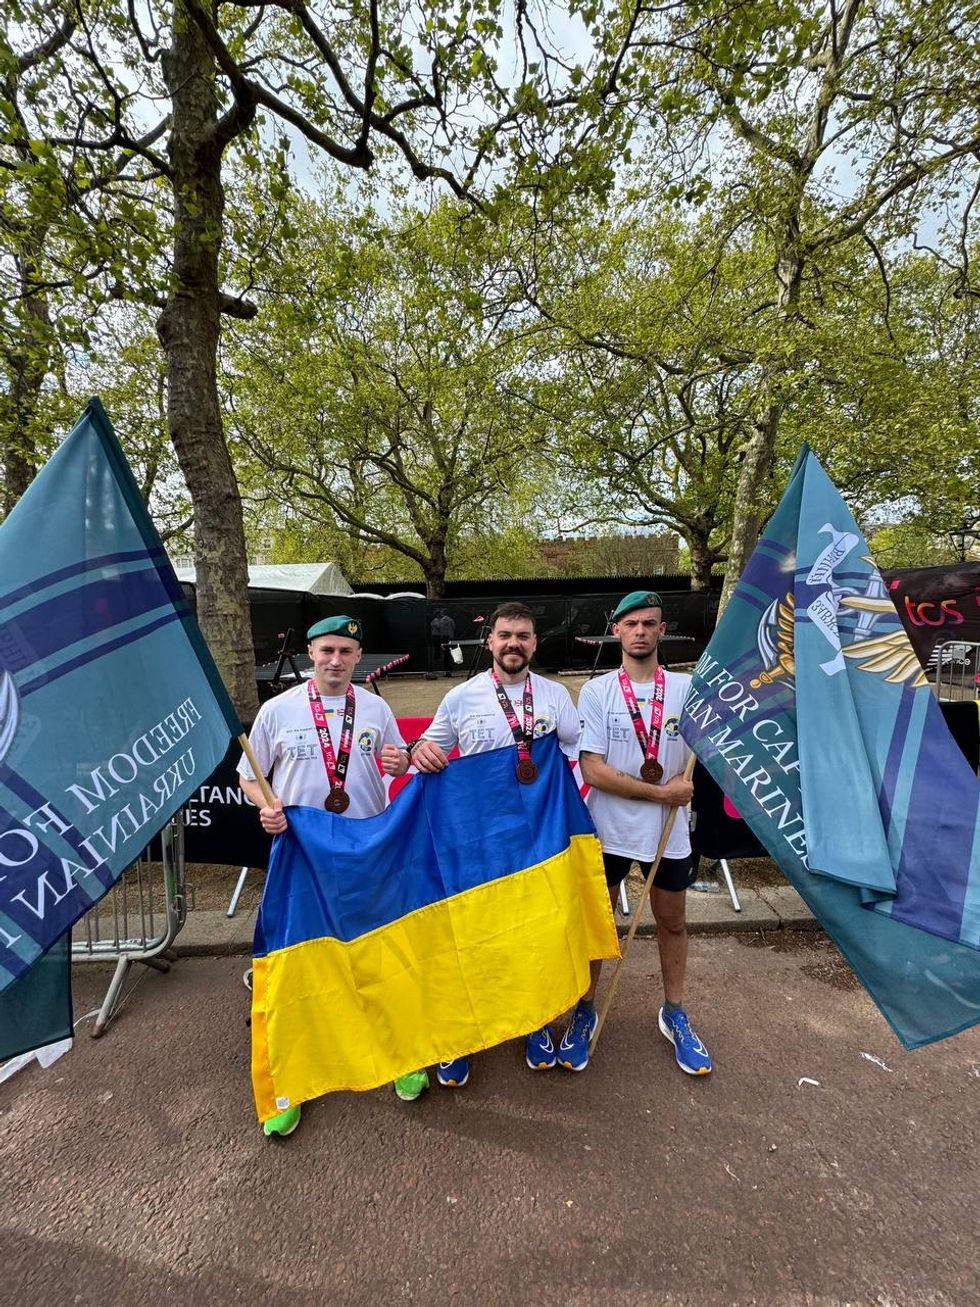 The men at the London Marathon holding a Ukrainian flag